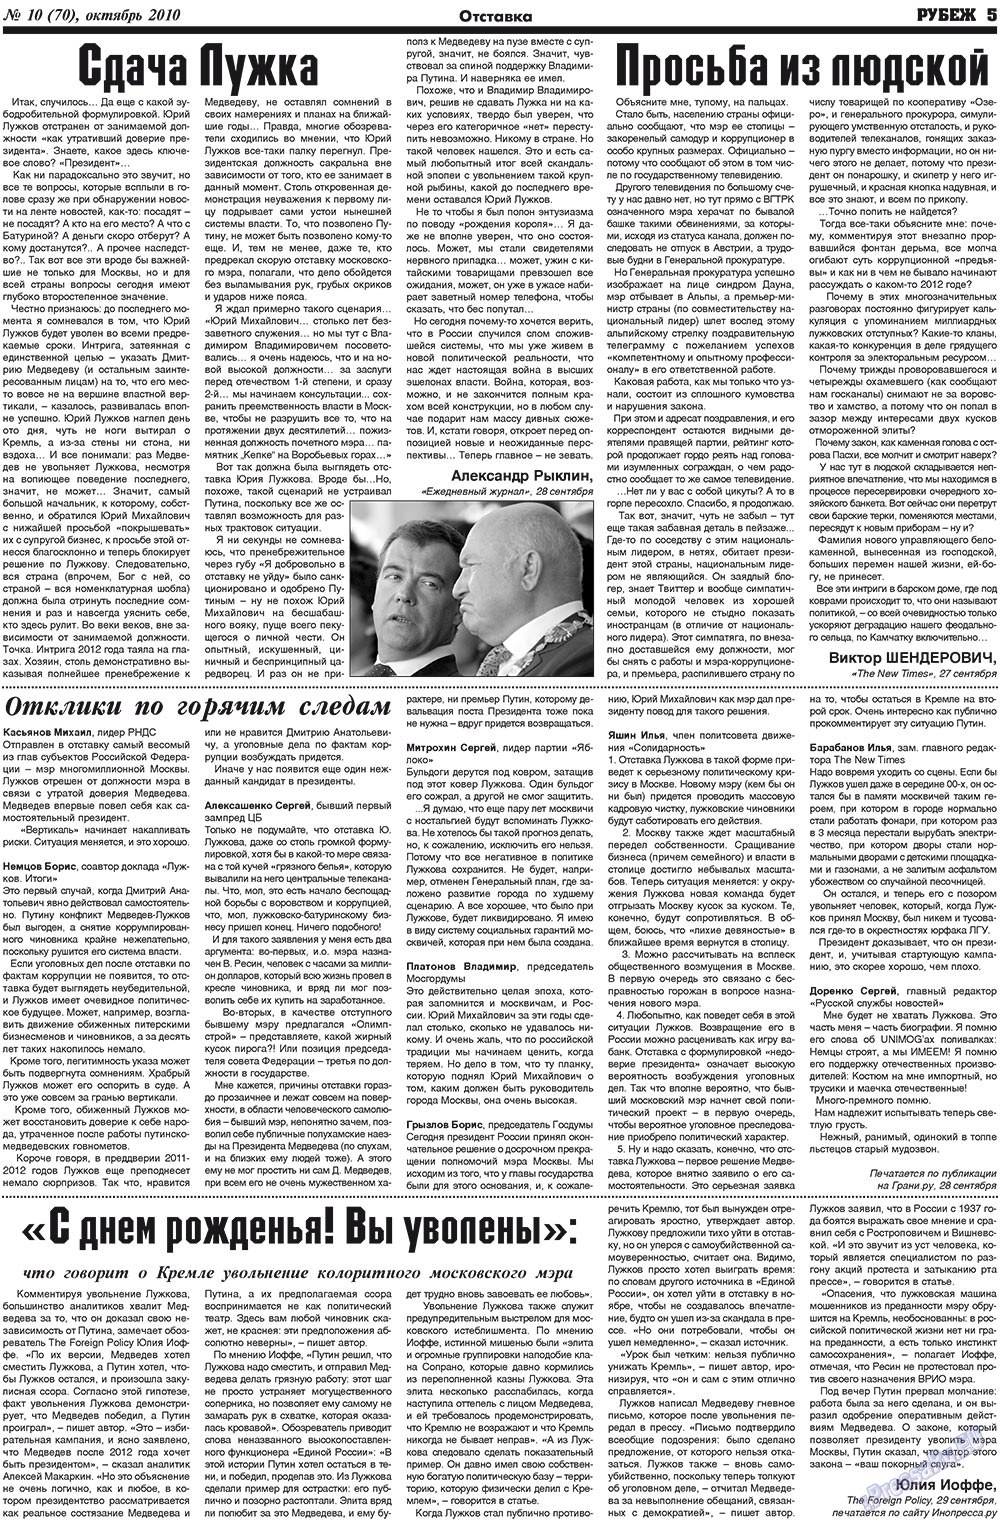 Рубеж, газета. 2010 №10 стр.5